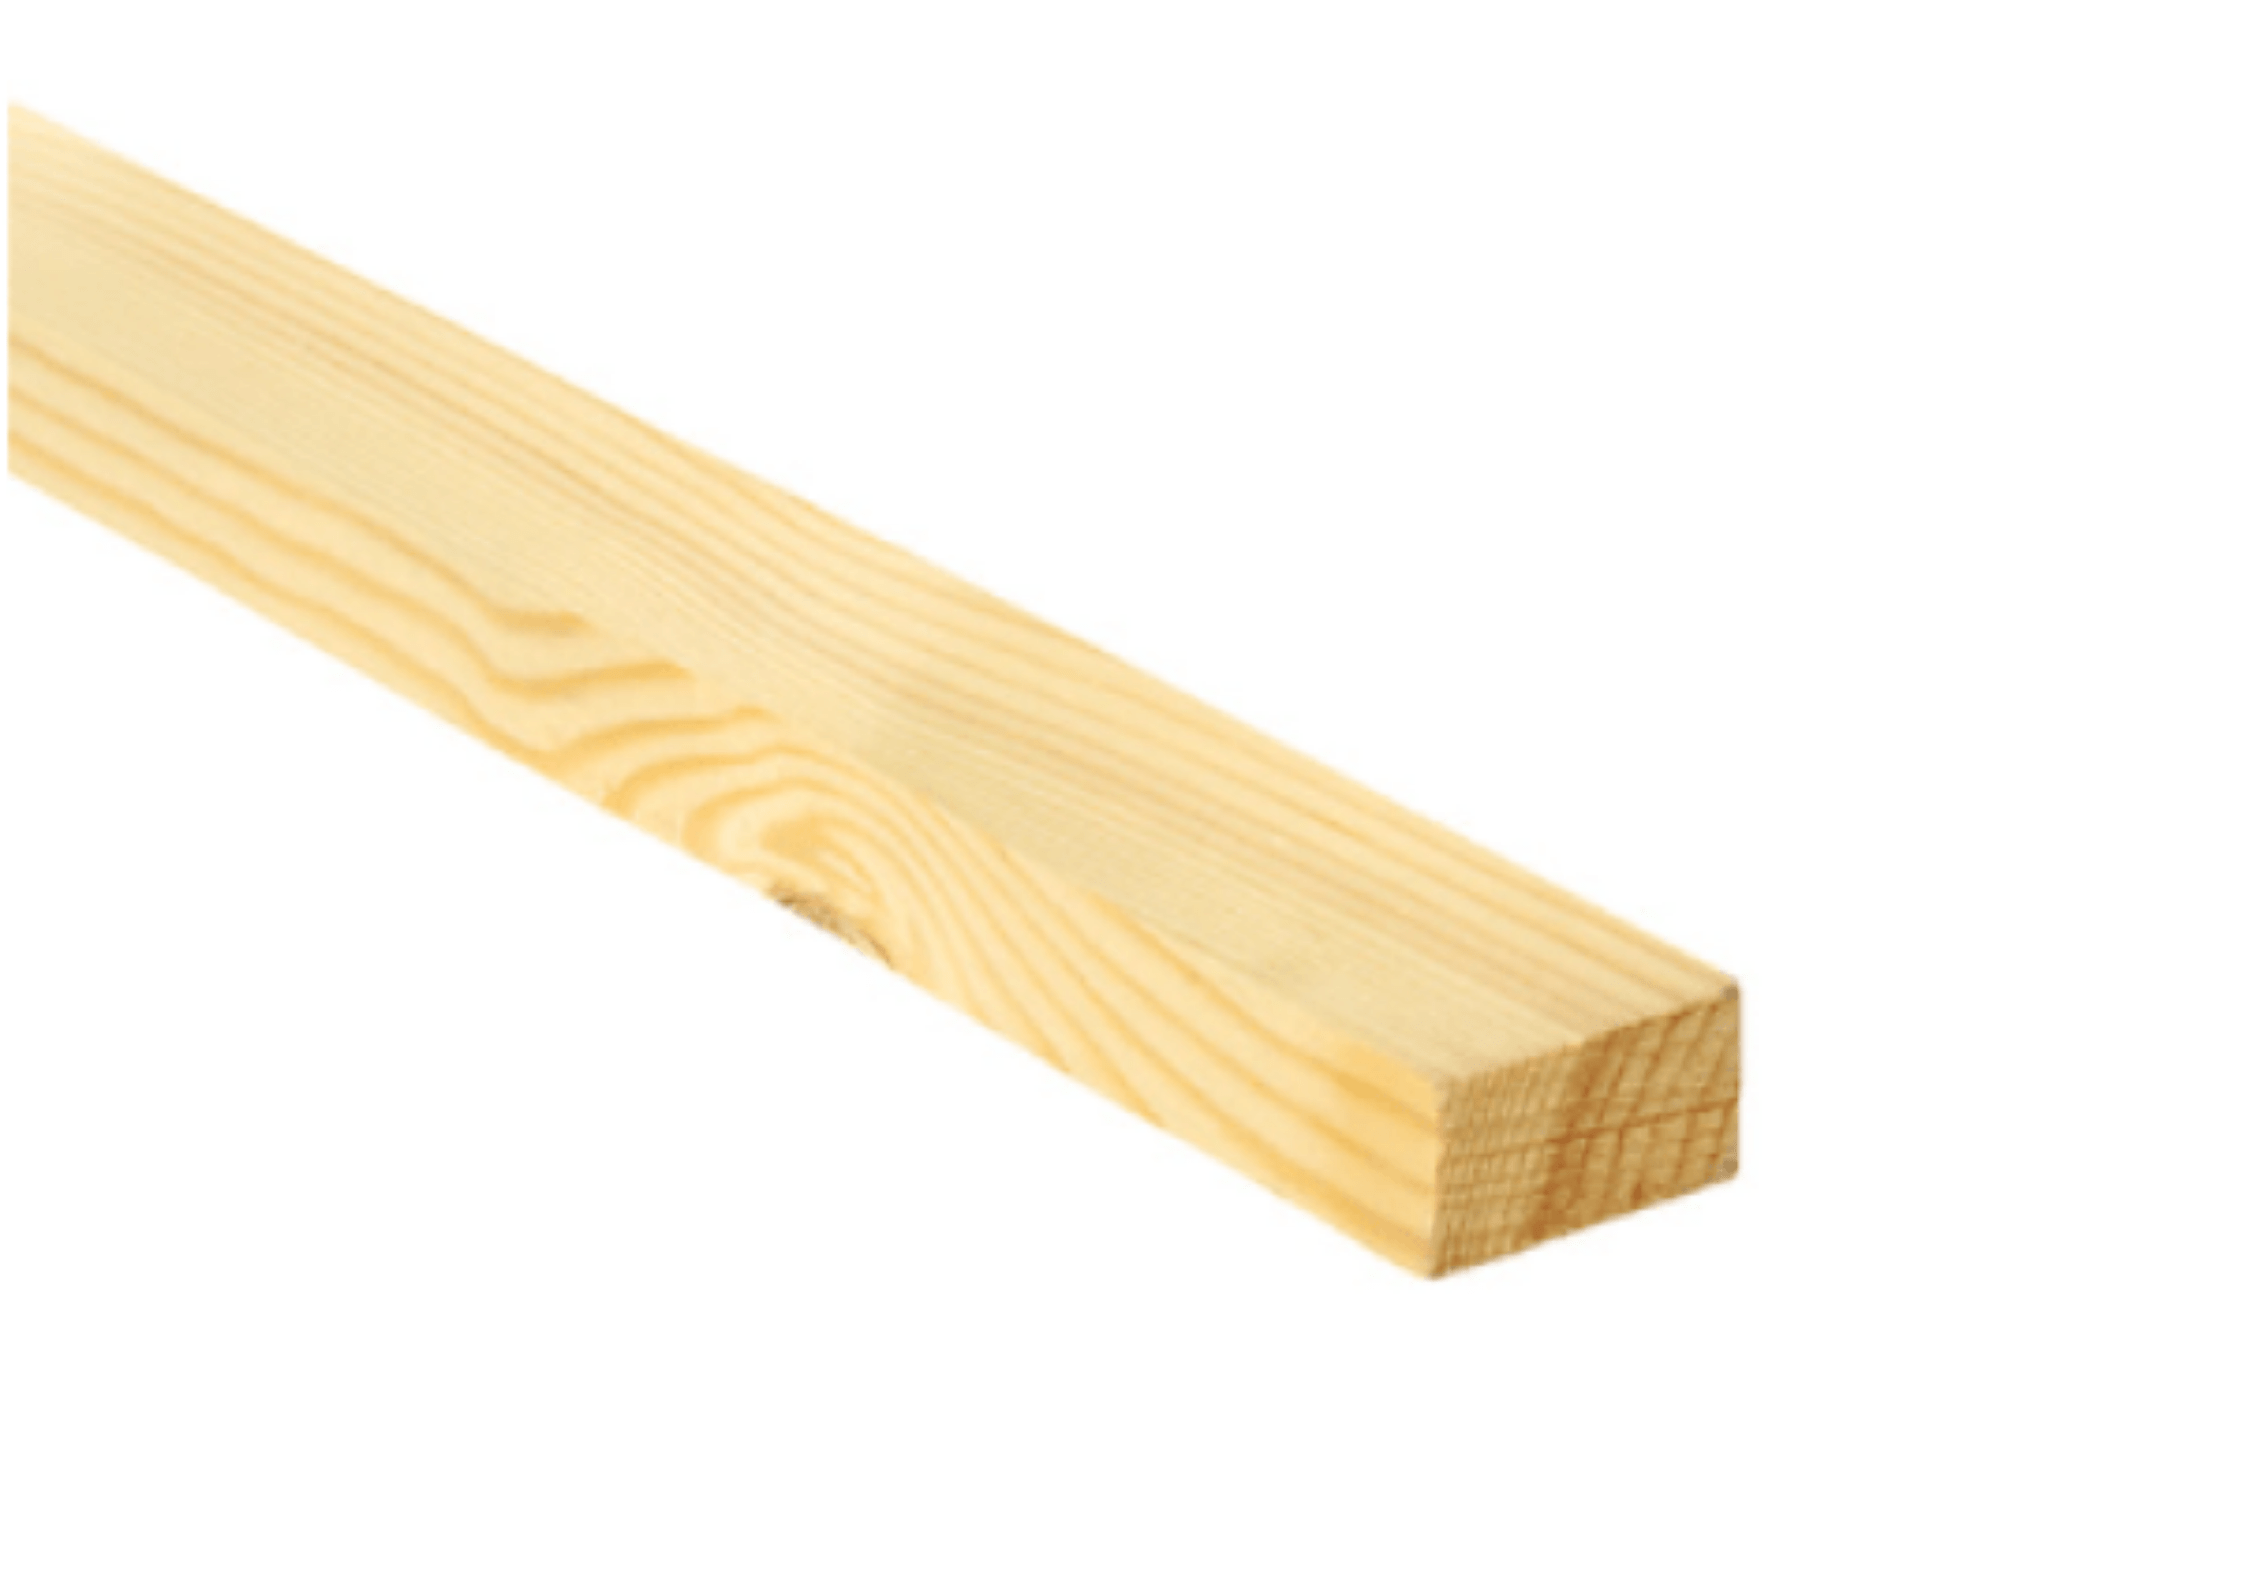 InsulationUK Construction Timber PSE Timber 18mm x 44mm x 2400mm (2x1) IUK01147 PSE Timber 18mm x 44mm x 2400mm (2x1) | insulationuk.co.uk